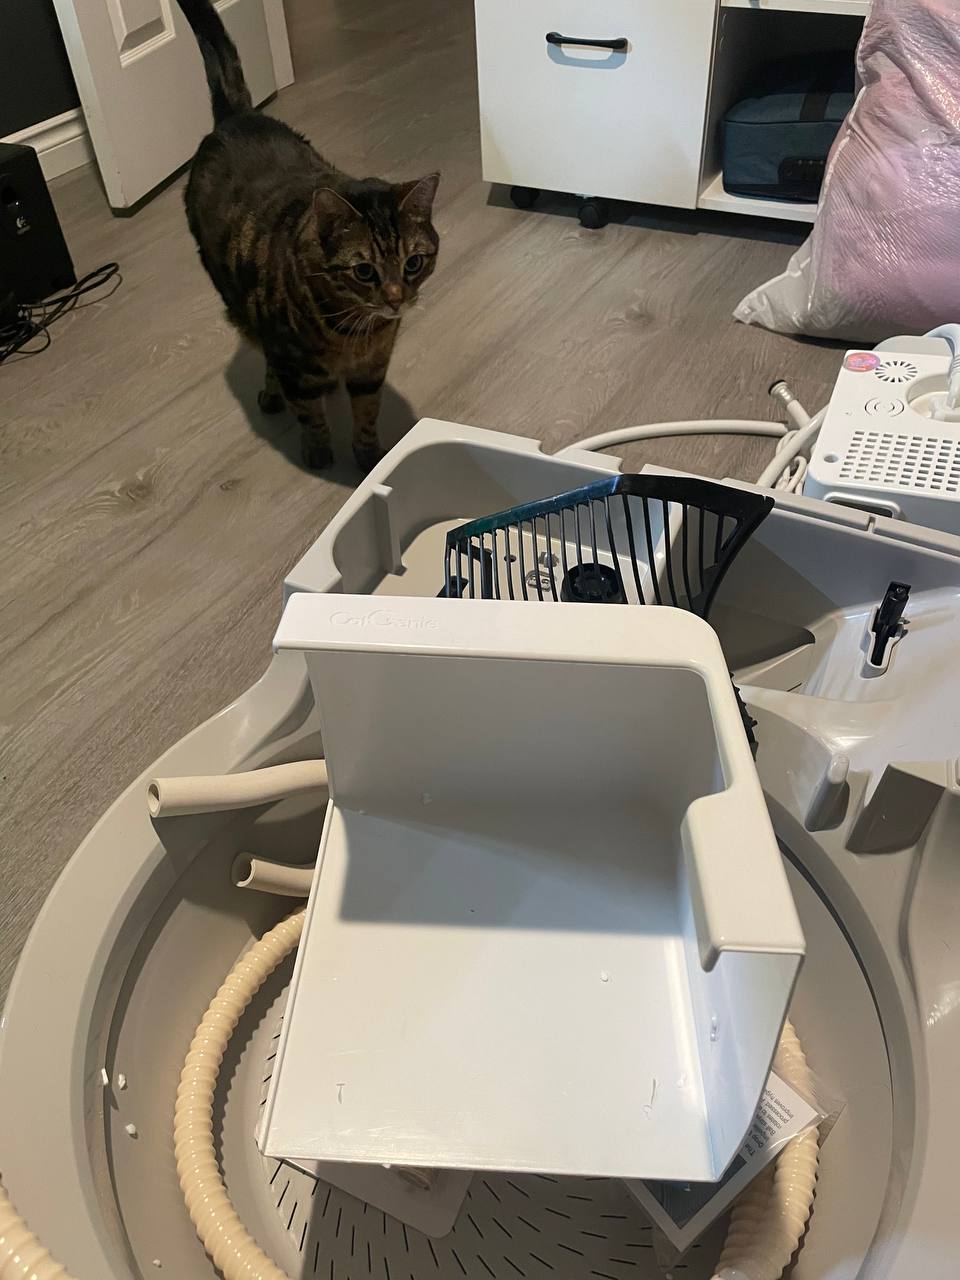 My cat watching how I install Cat Genie A.I. litter box